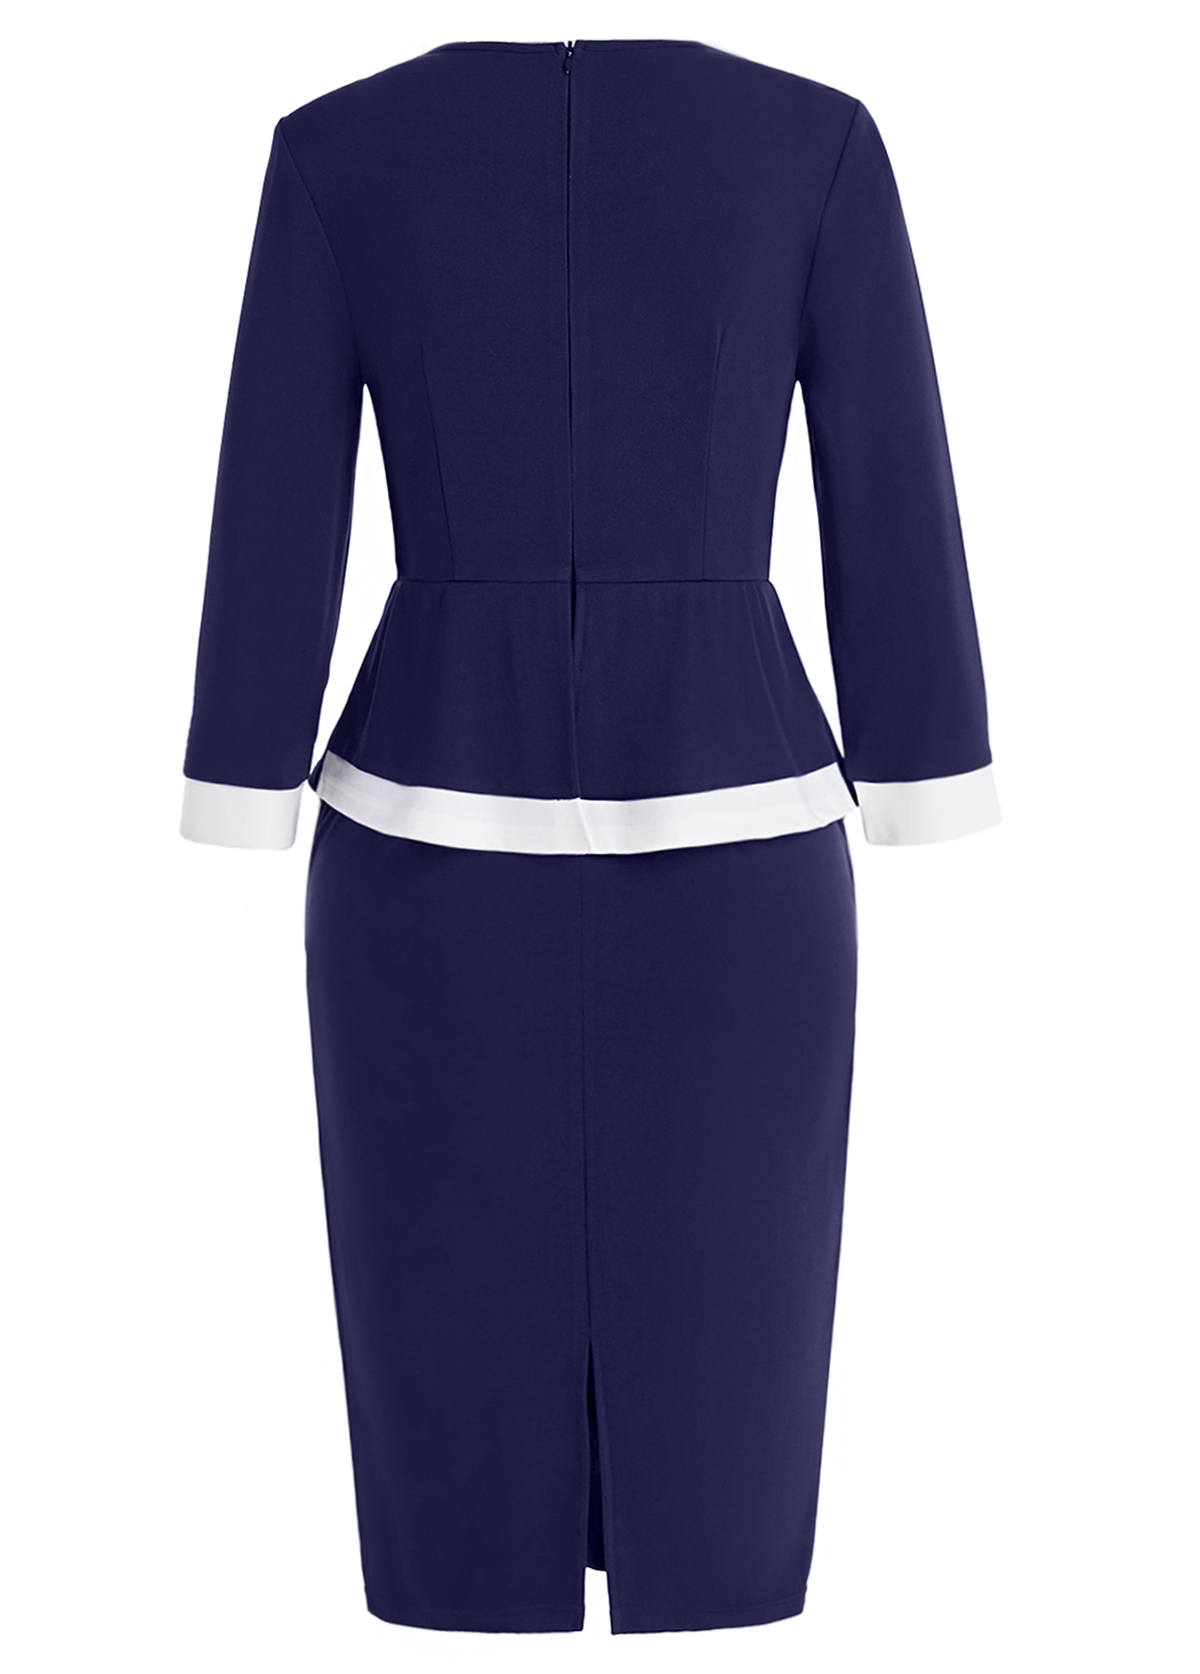 Split Navy Three Quarter Length Sleeve Bodycon Dress